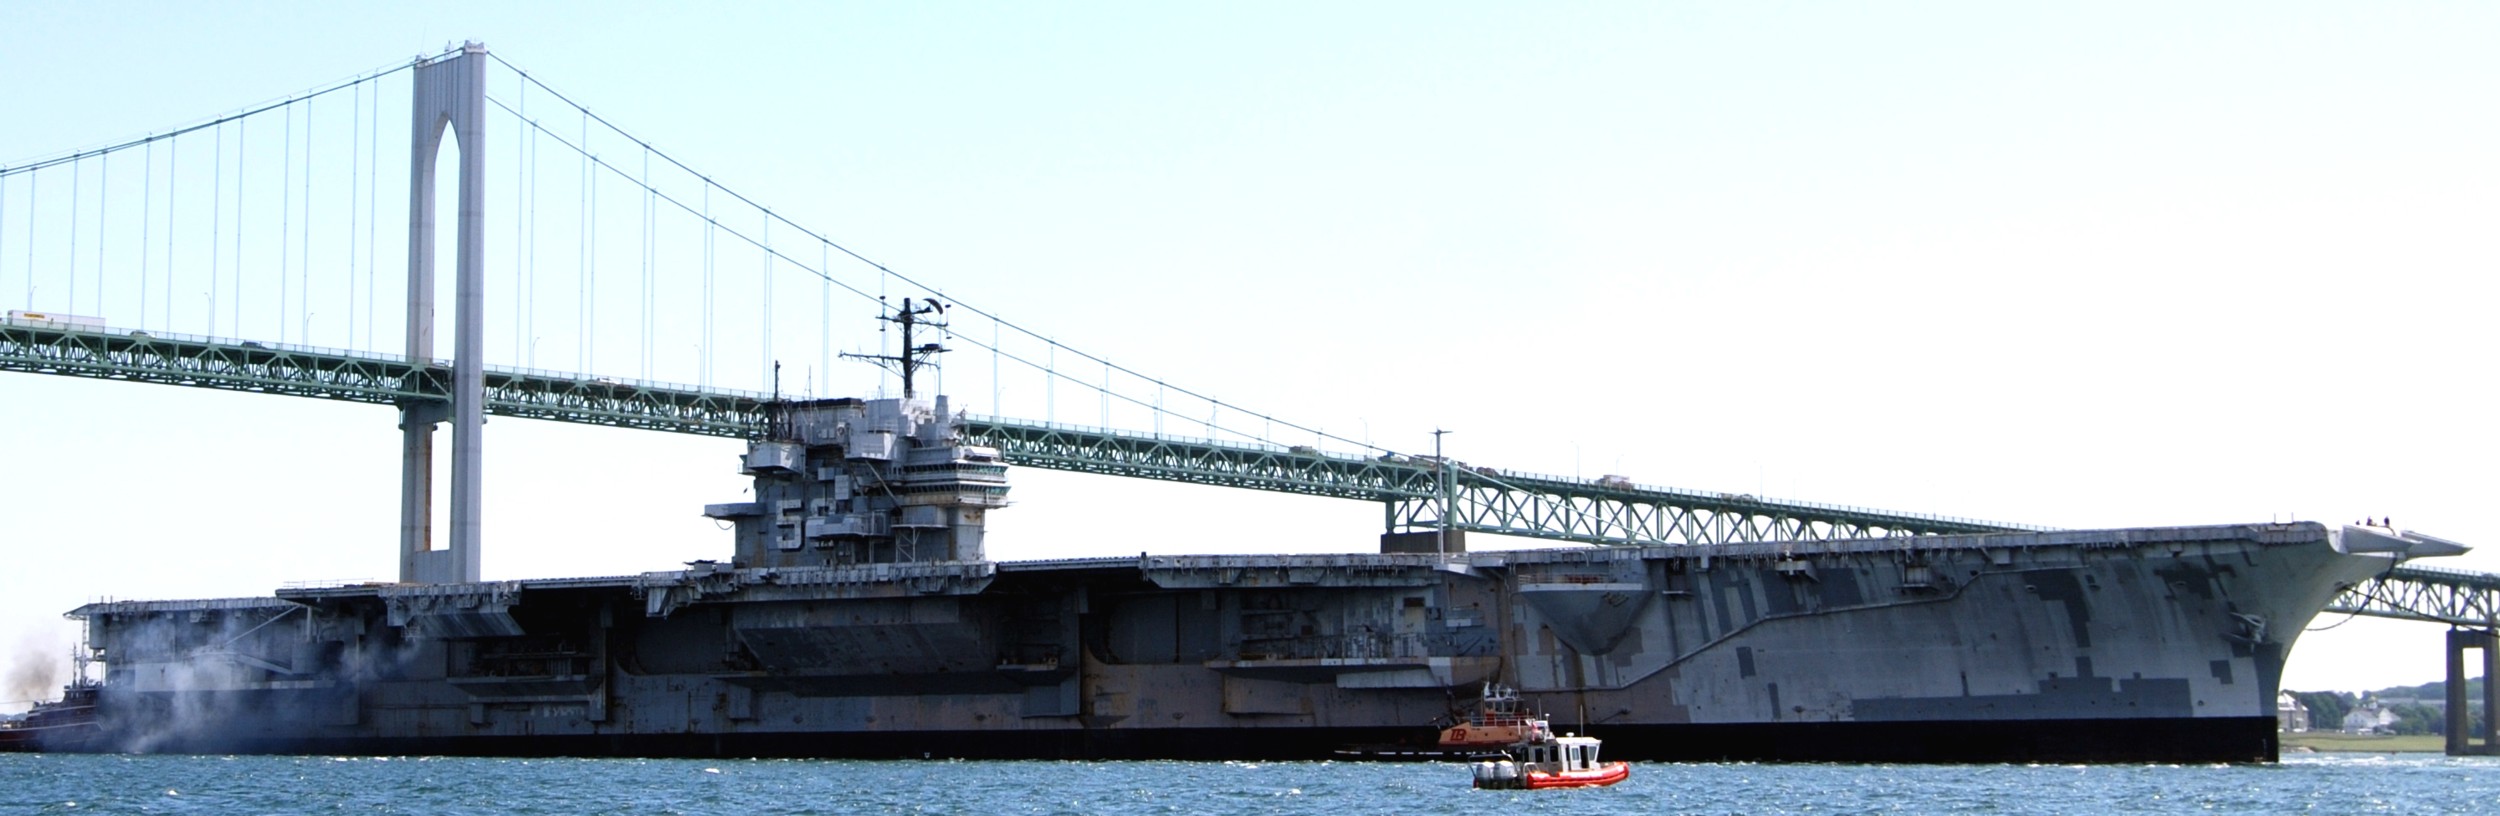 cv-59 uss forrestal aircraft carrier us navy nismf philadelphia 13